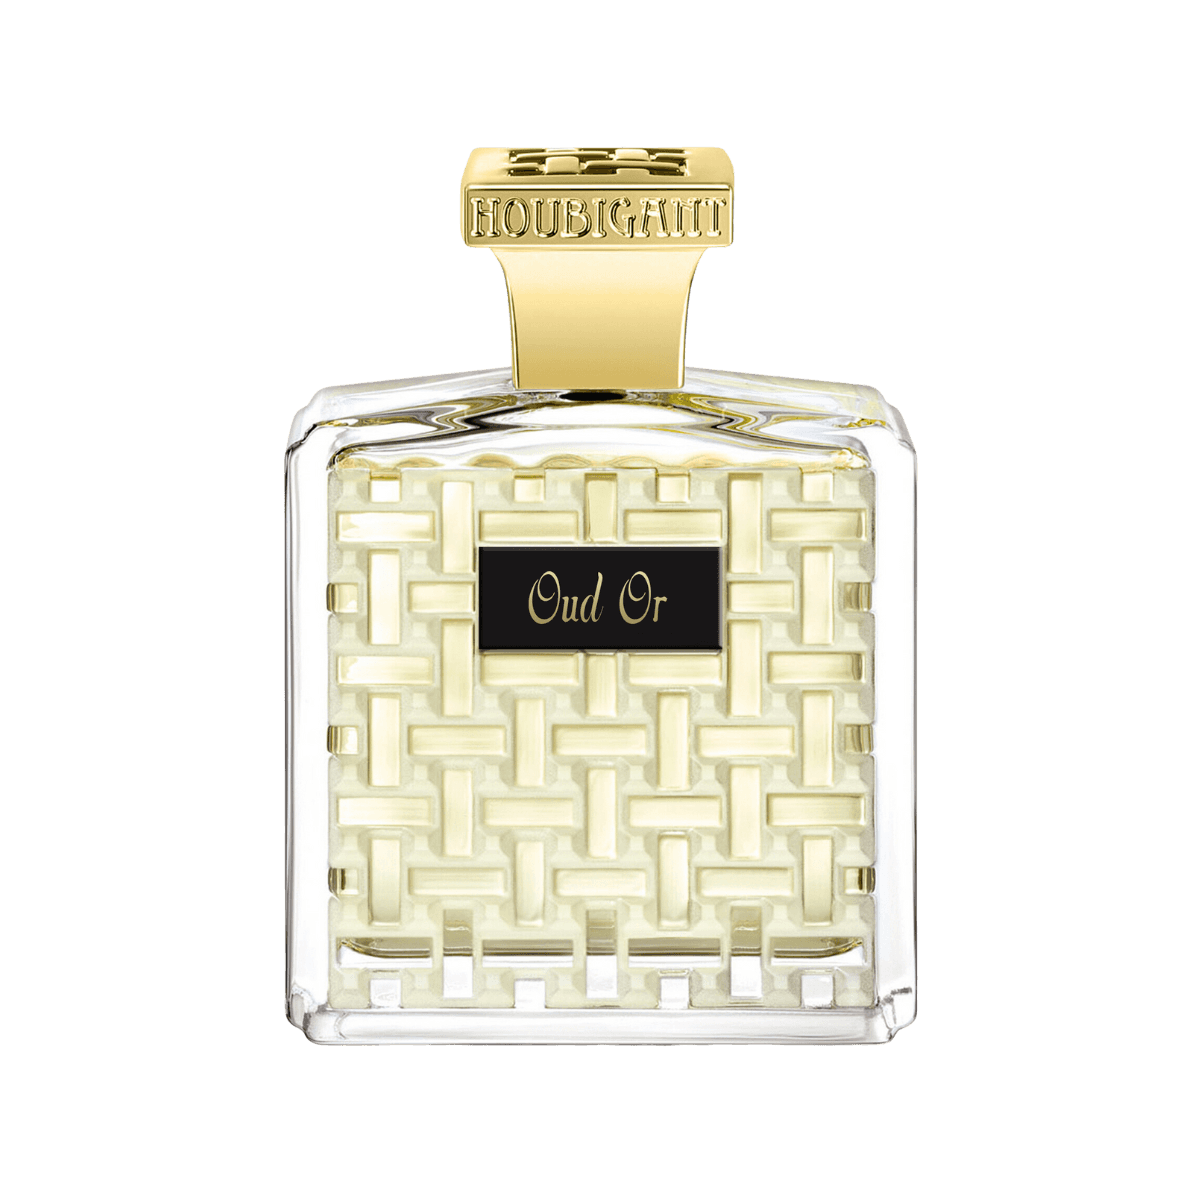 Image of Oud or Eau eau de parfum by the perfume brand Houbigant